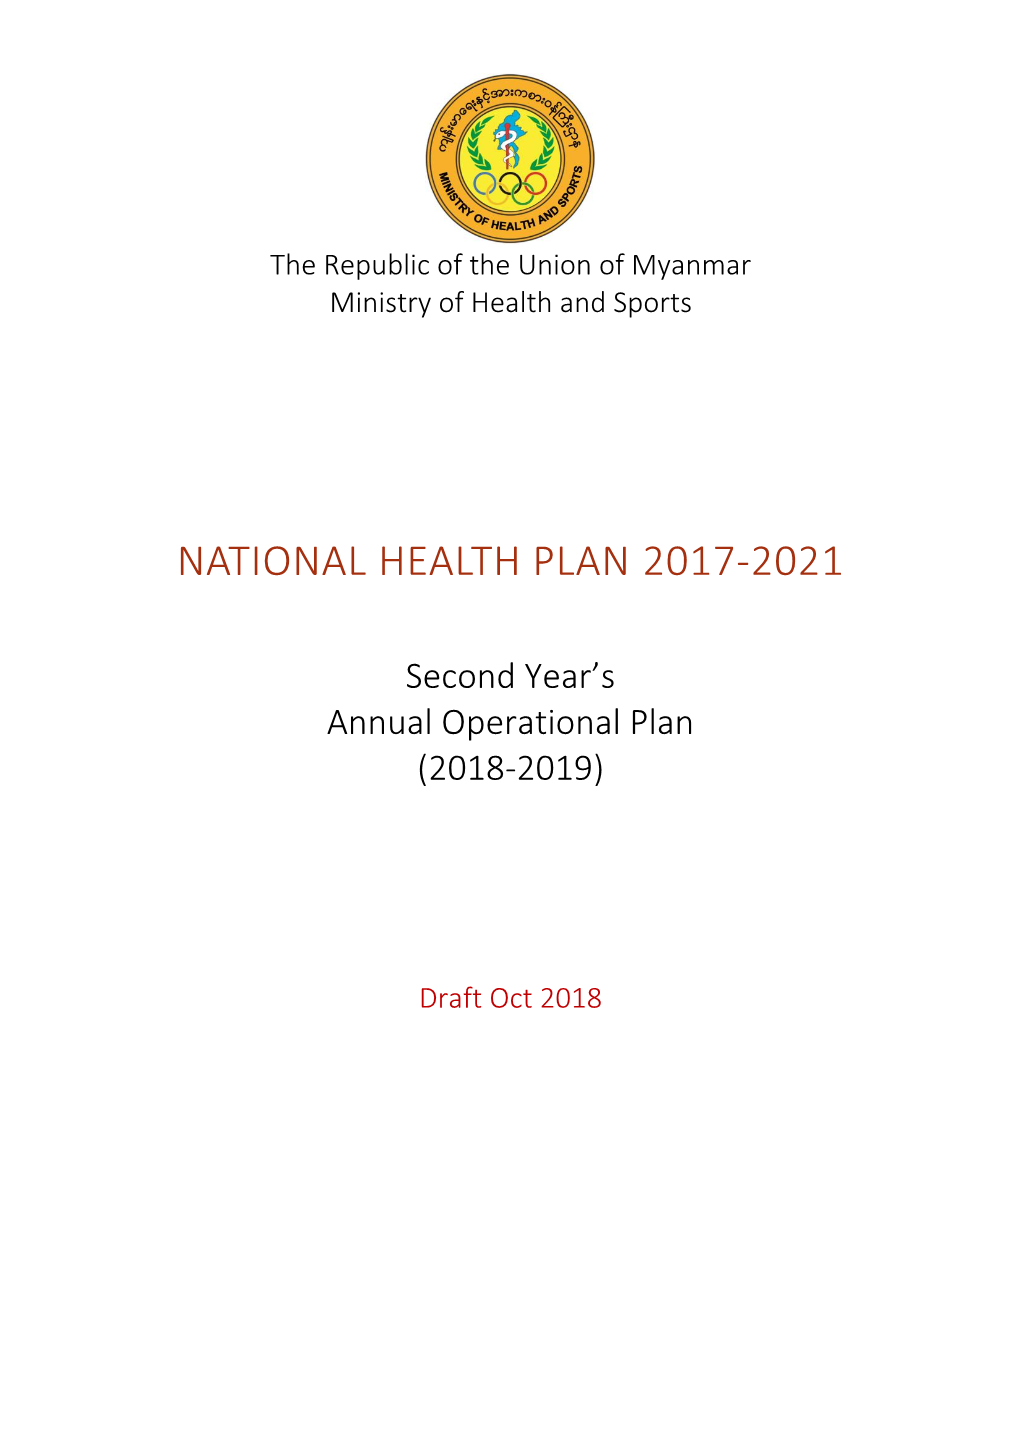 National Health Plan 2017-2021